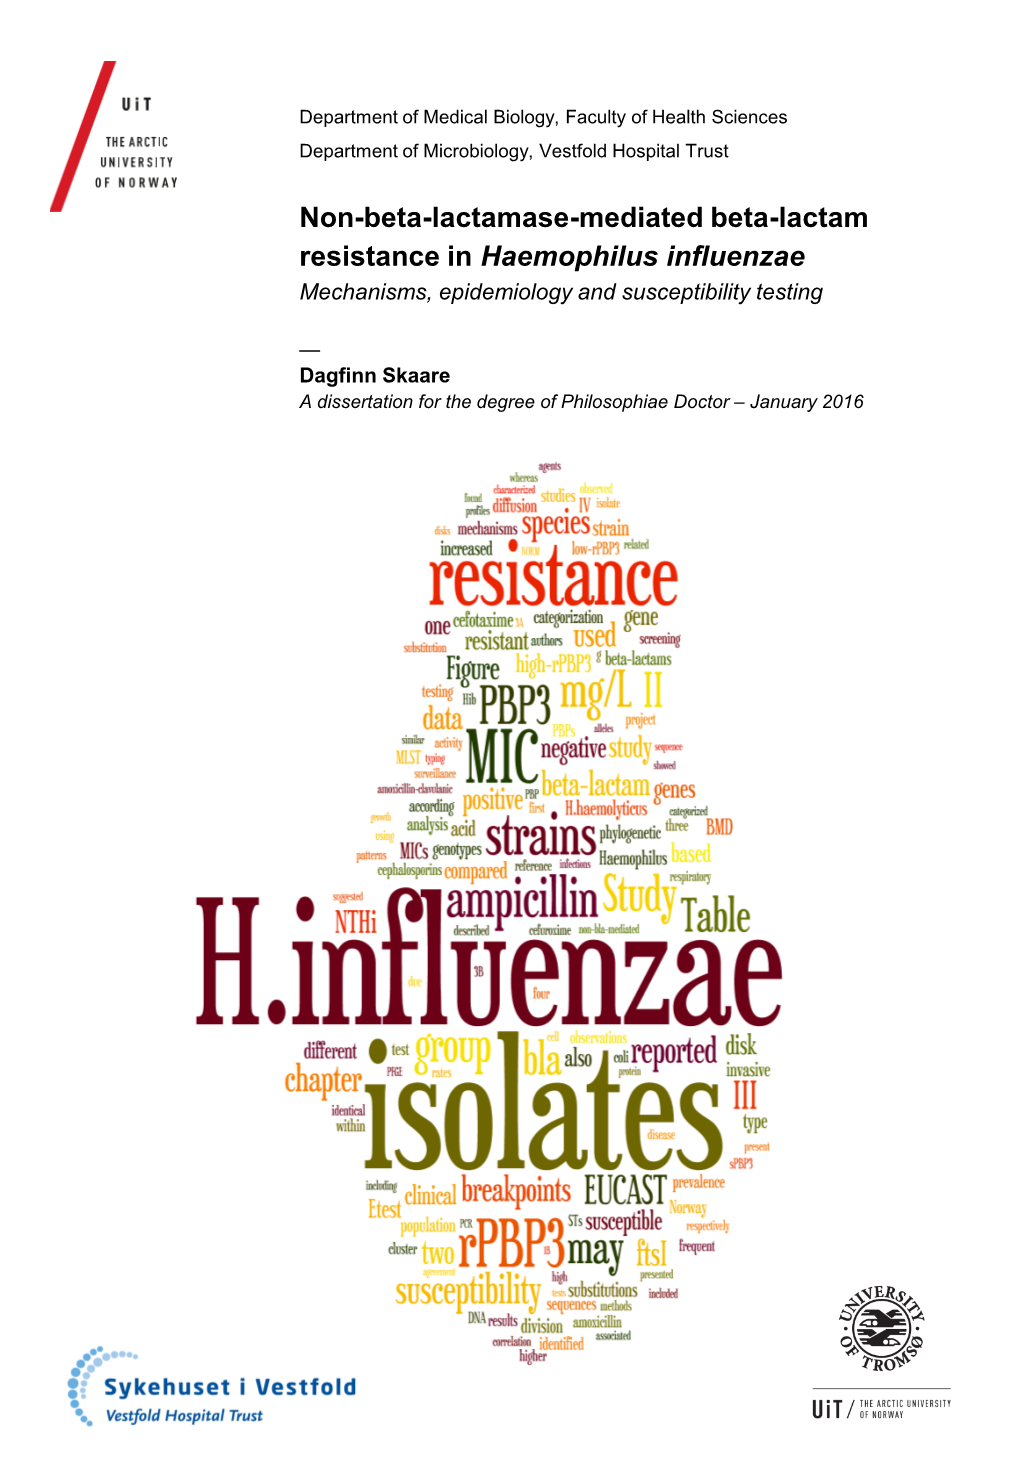 Non-Beta-Lactamase-Mediated Beta-Lactam Resistance in Haemophilus Influenzae Mechanisms, Epidemiology and Susceptibility Testing